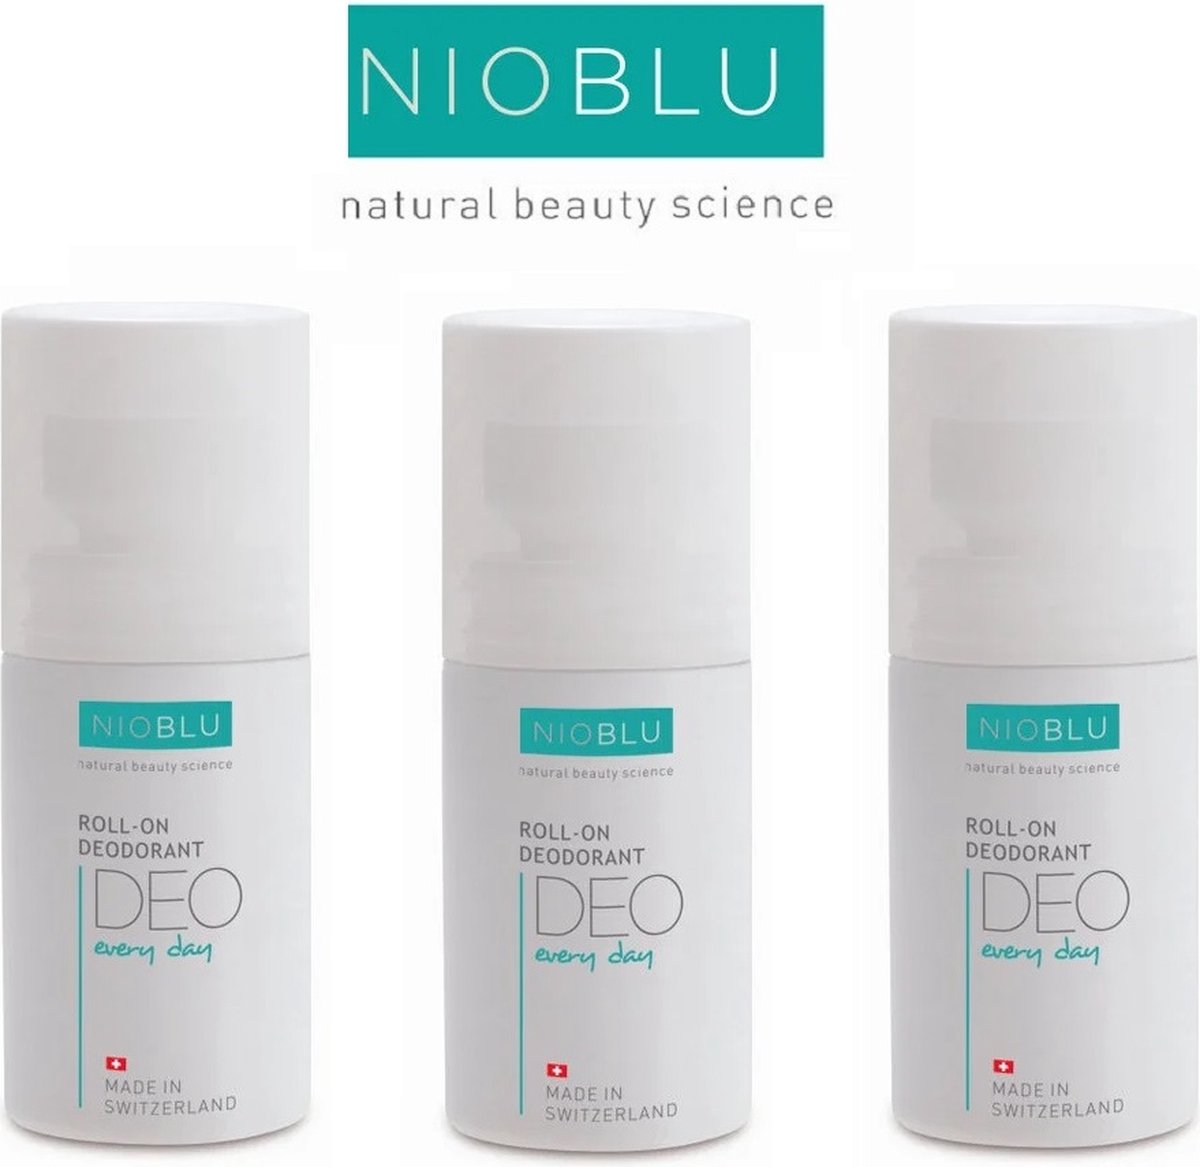 NIOBLU - Every Day - Roll-on - Deodorant - 3 pack